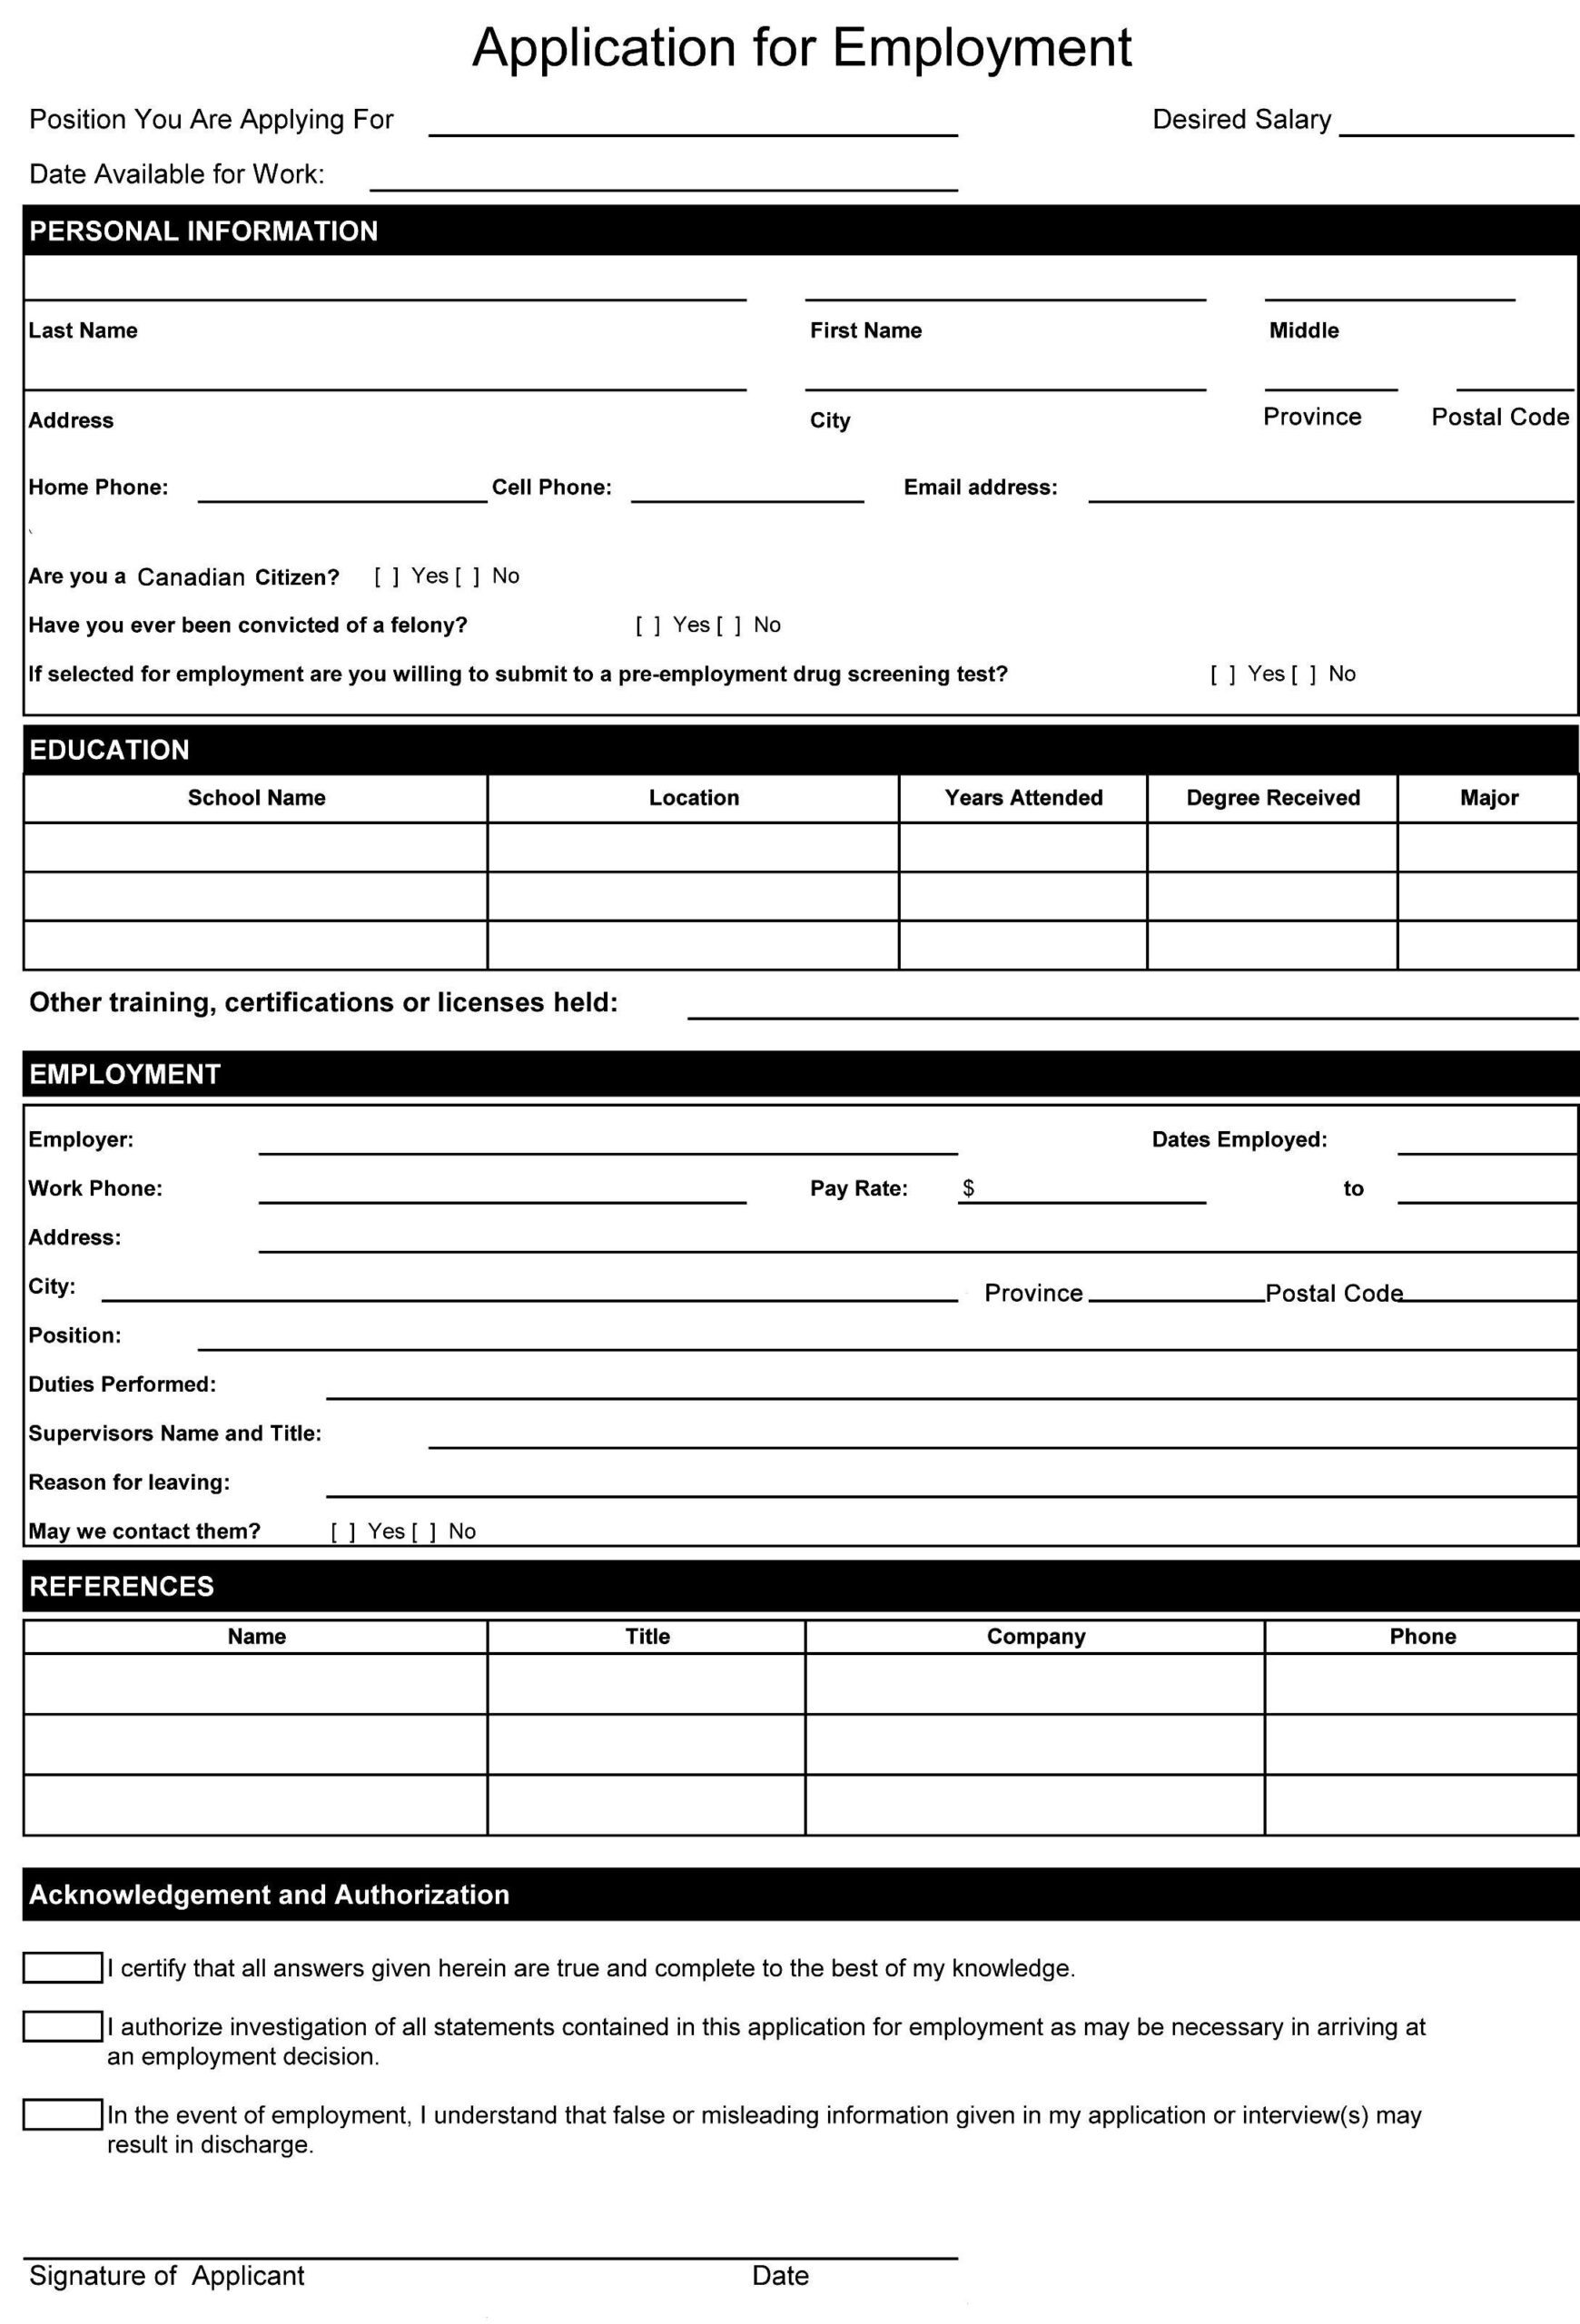 Resume Format Word Document | Job Application Form In Job Application Template Word Document